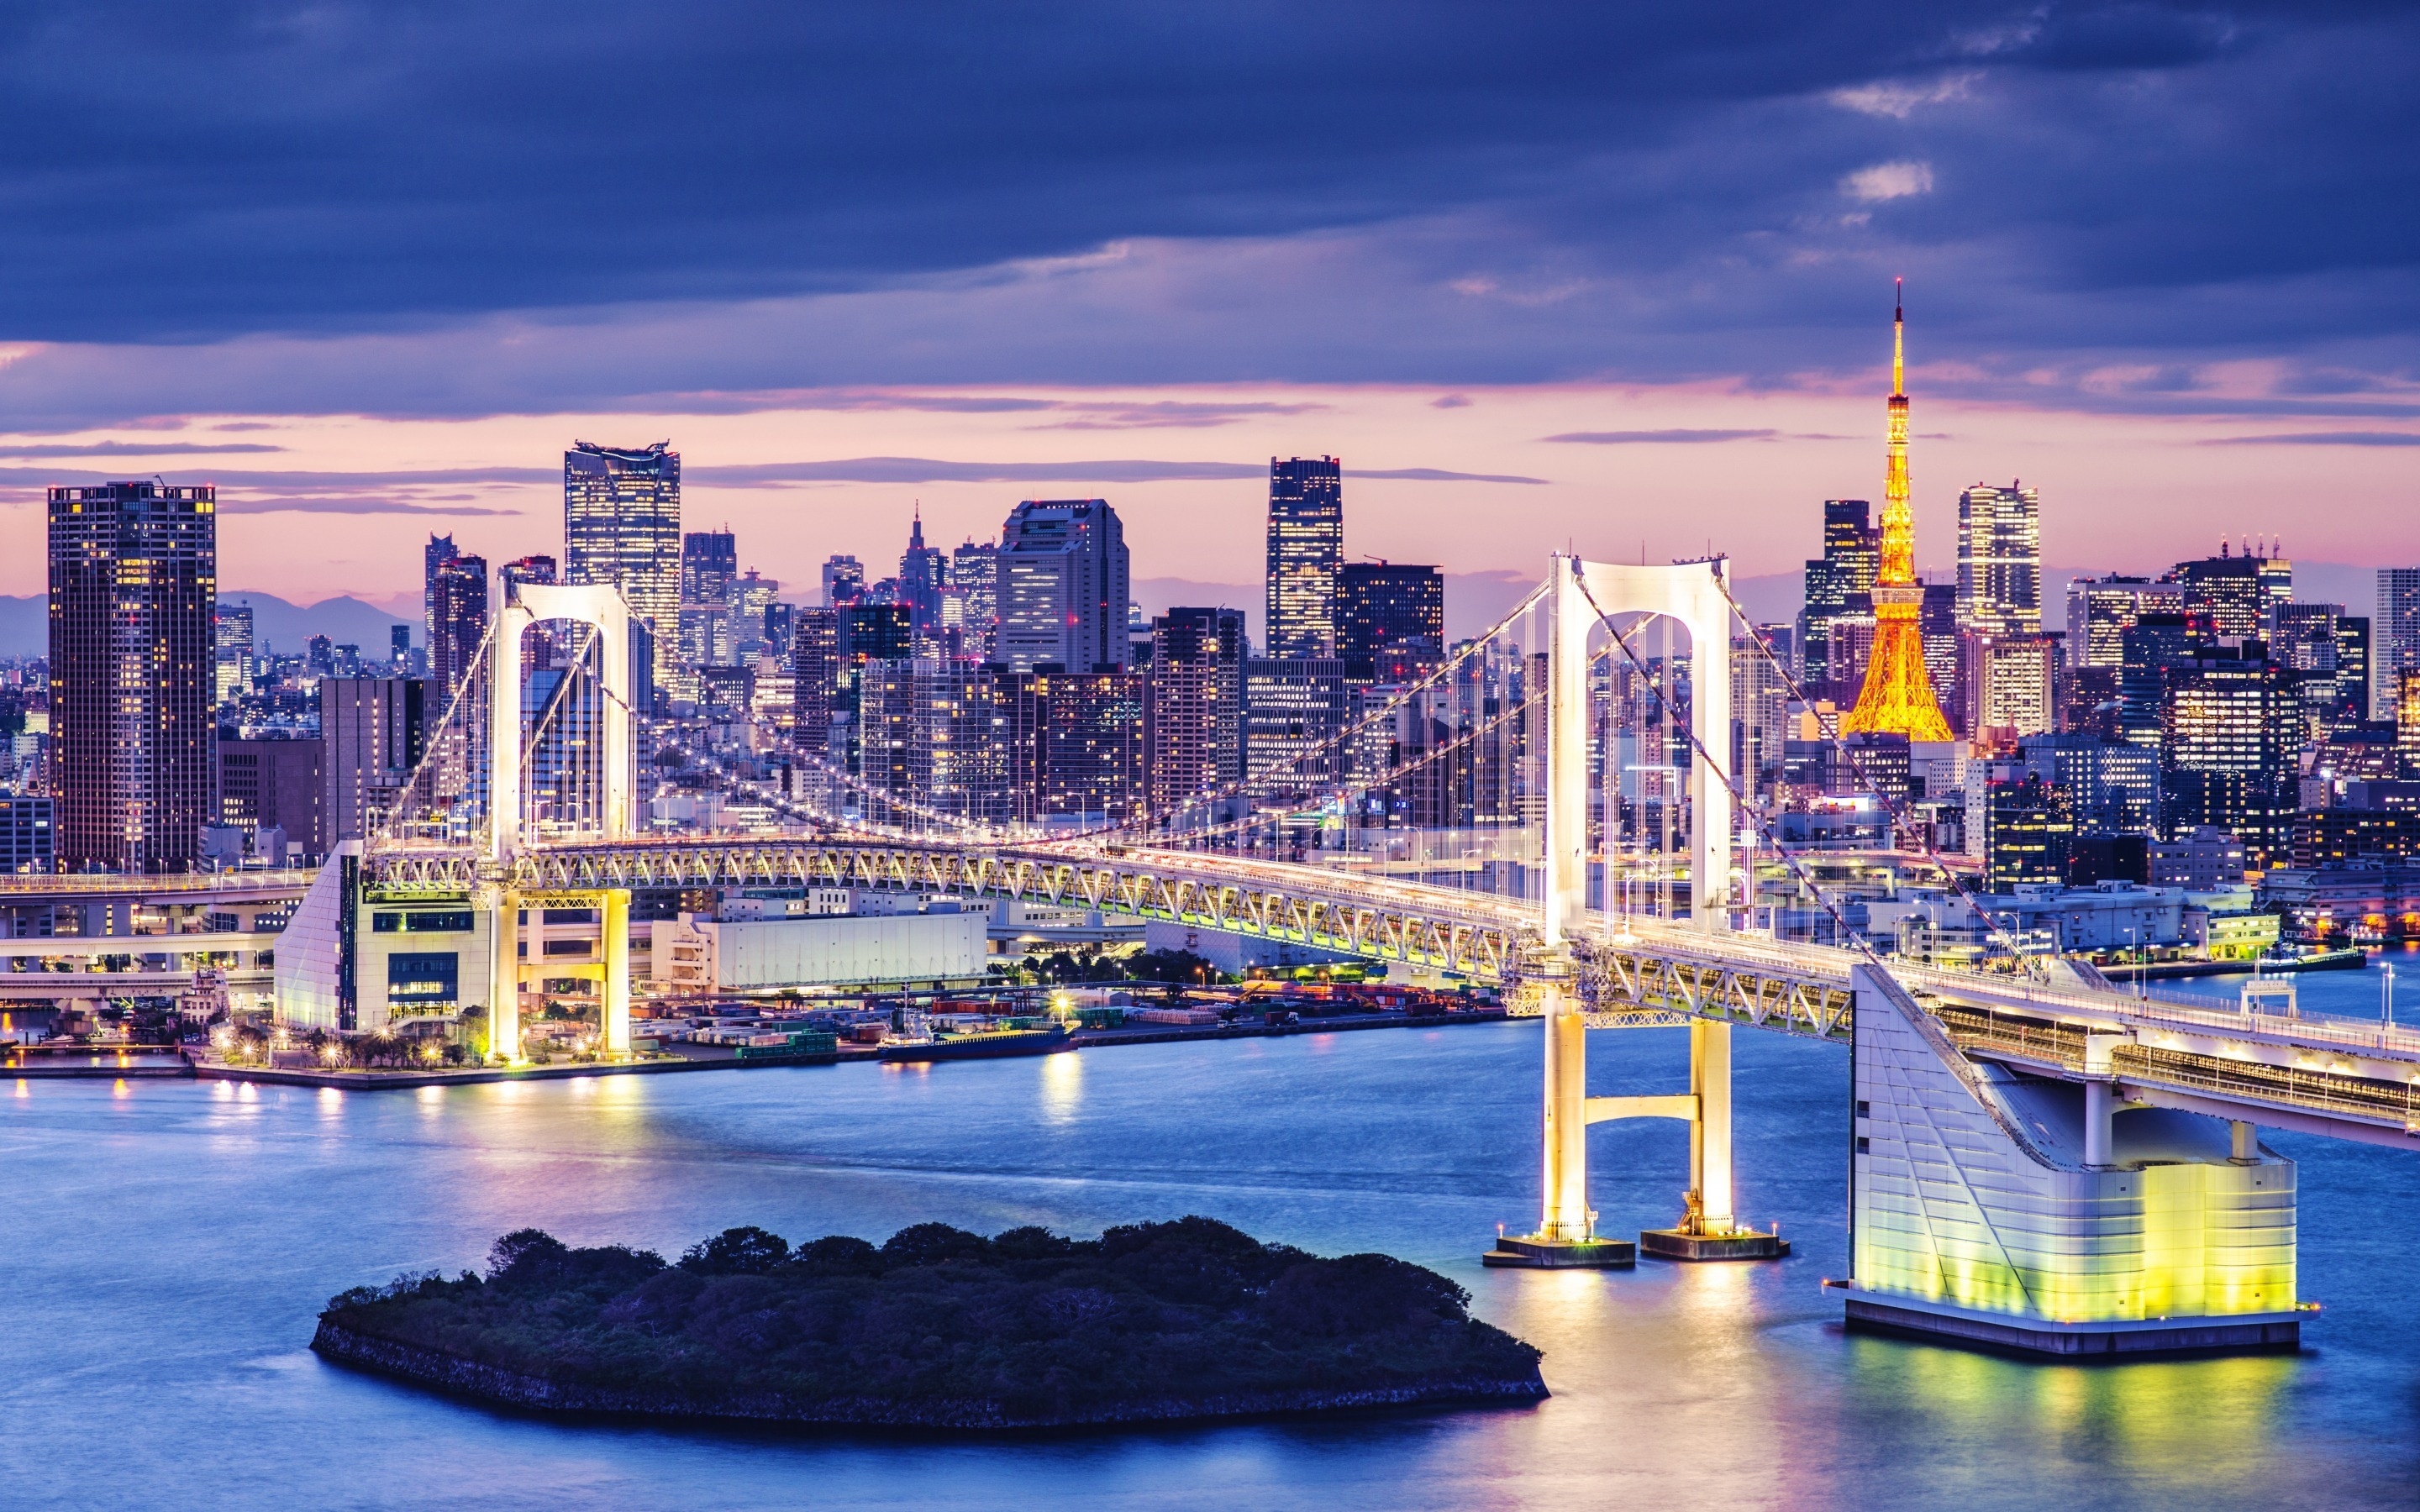 Tokyo Night View  for 2880 x 1800 Retina Display resolution